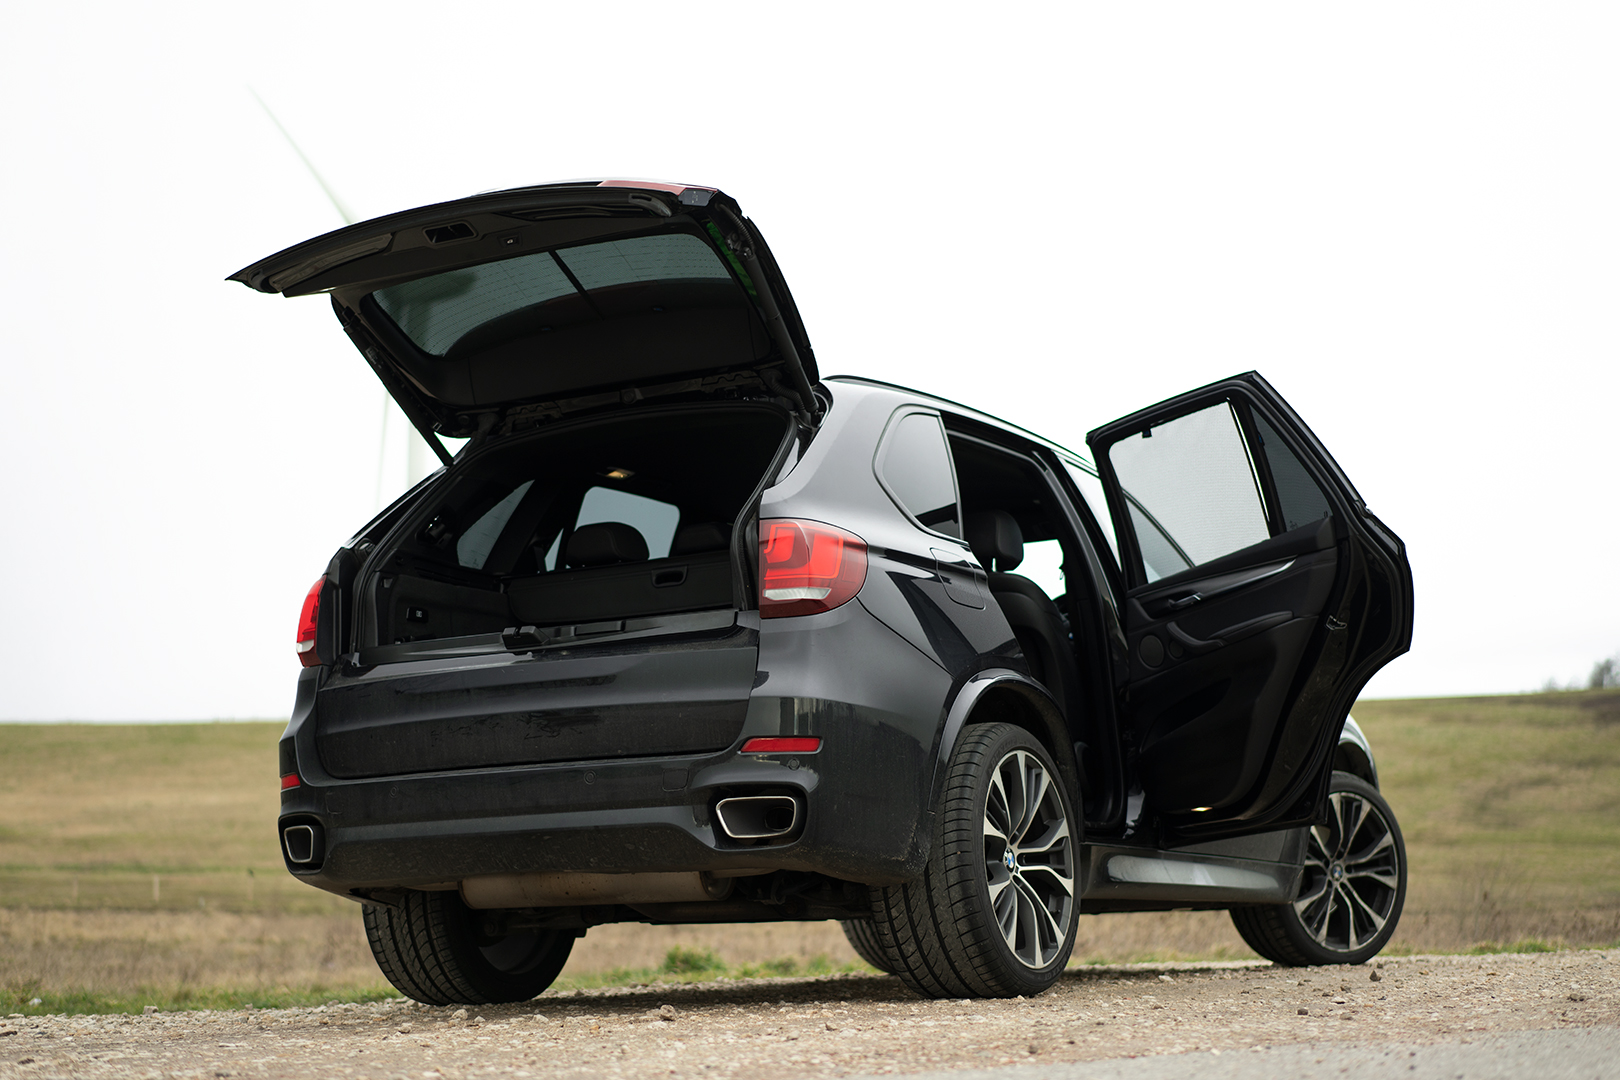 Car Shades - BMW X5 5 Door (F15) 2014-17 - Full Rear Set